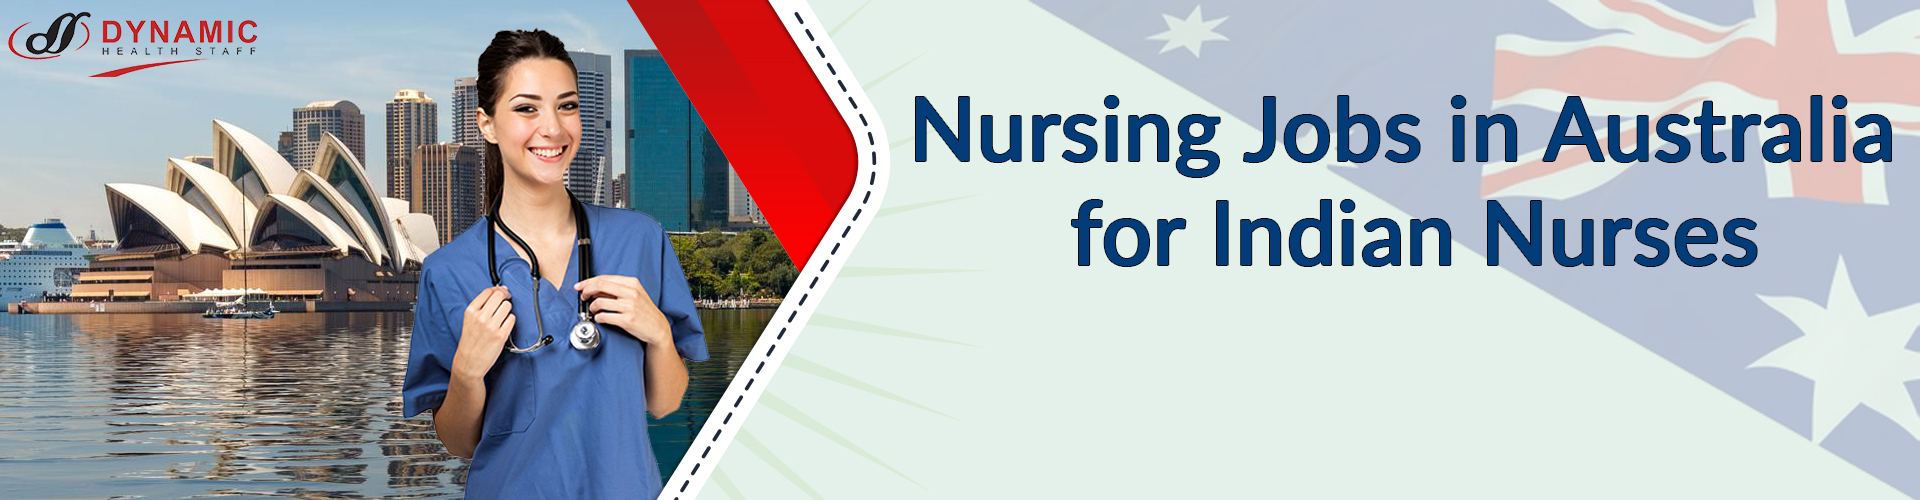 Nursing Jobs in Australia for Indian Nurses